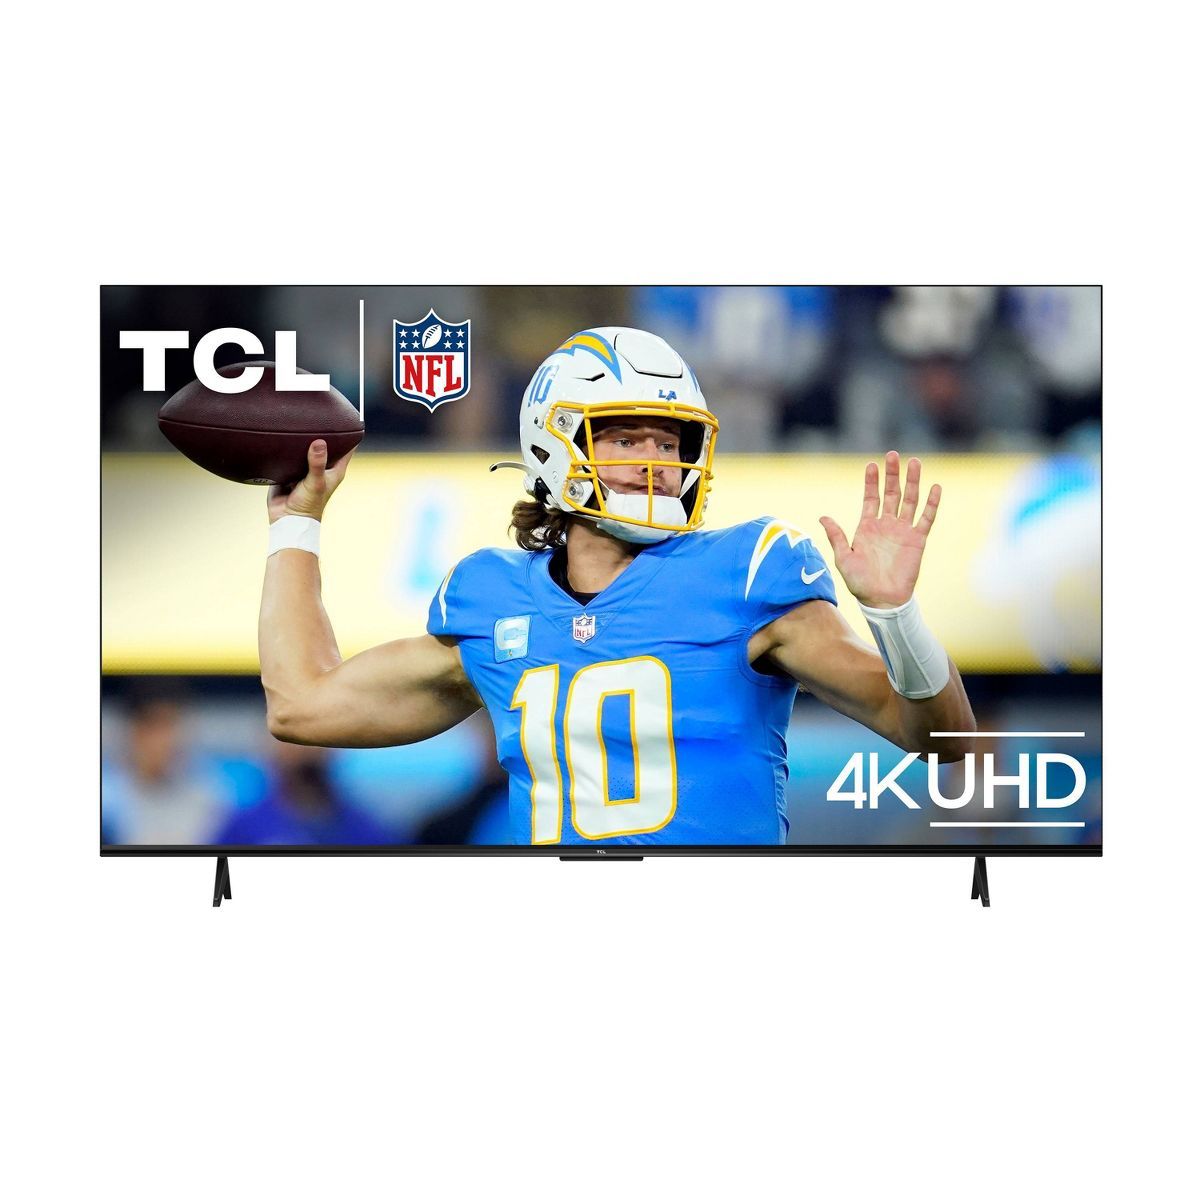 TCL 75" Class S4 S-Class 4K UHD HDR LED Smart TV with Google TV - 75S450G | Target